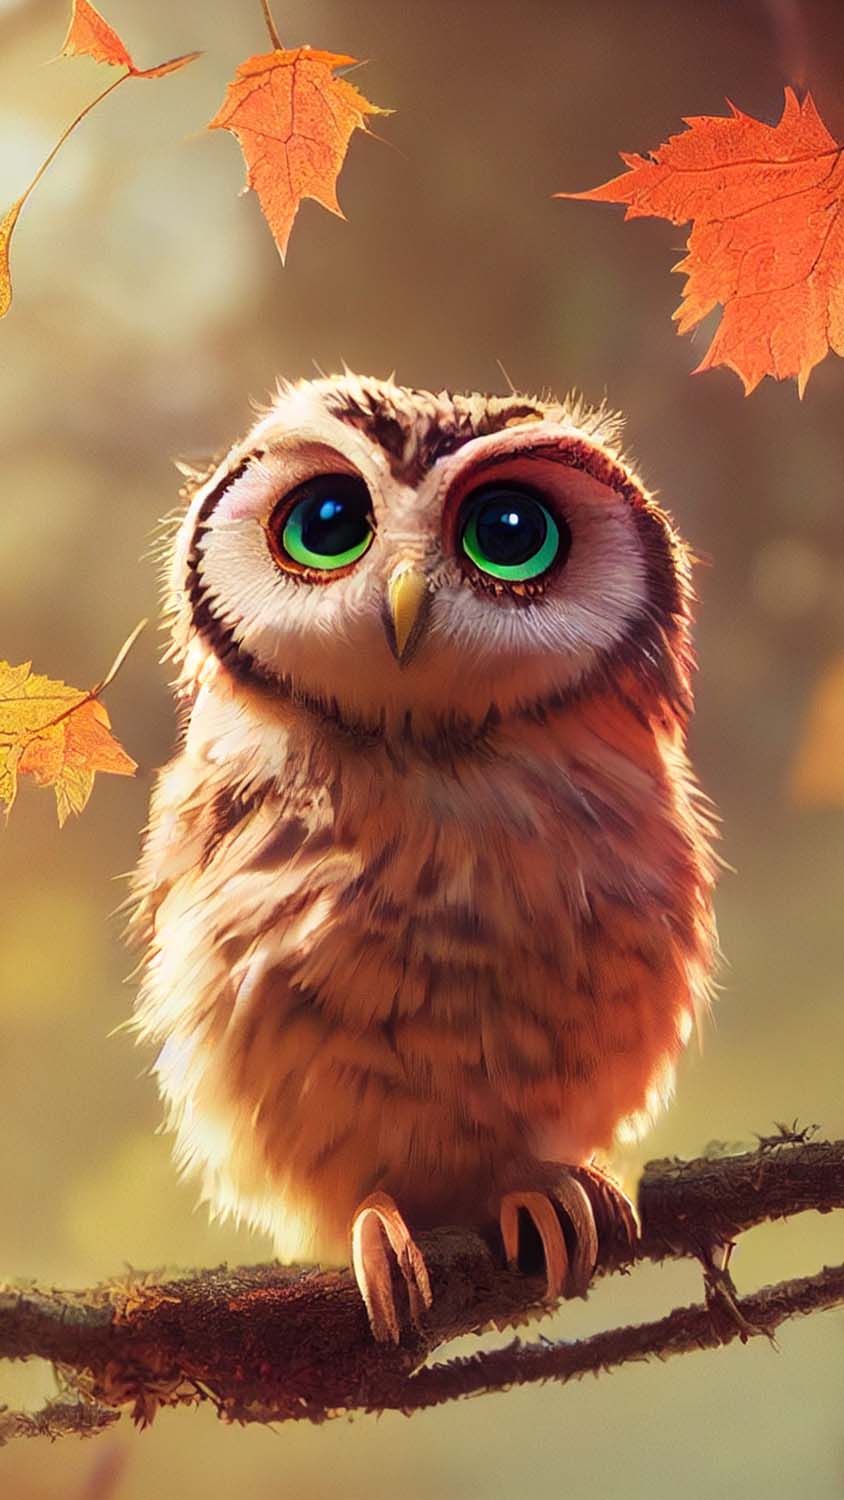 Autumn Owl iPhone Wallpaper HD